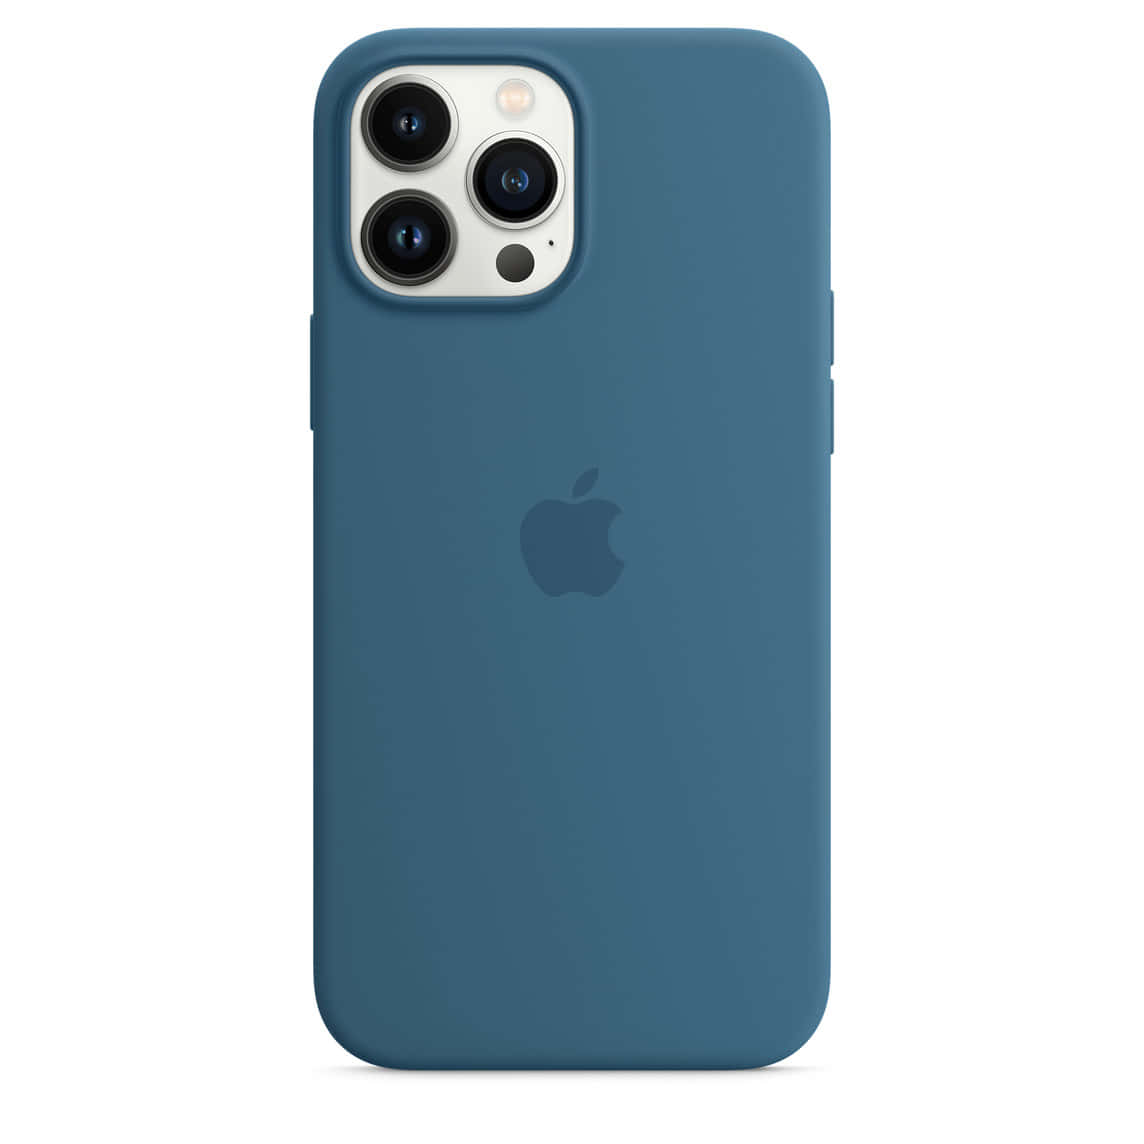 Mobilskalenfärgat Blått Iphone-skal Bild